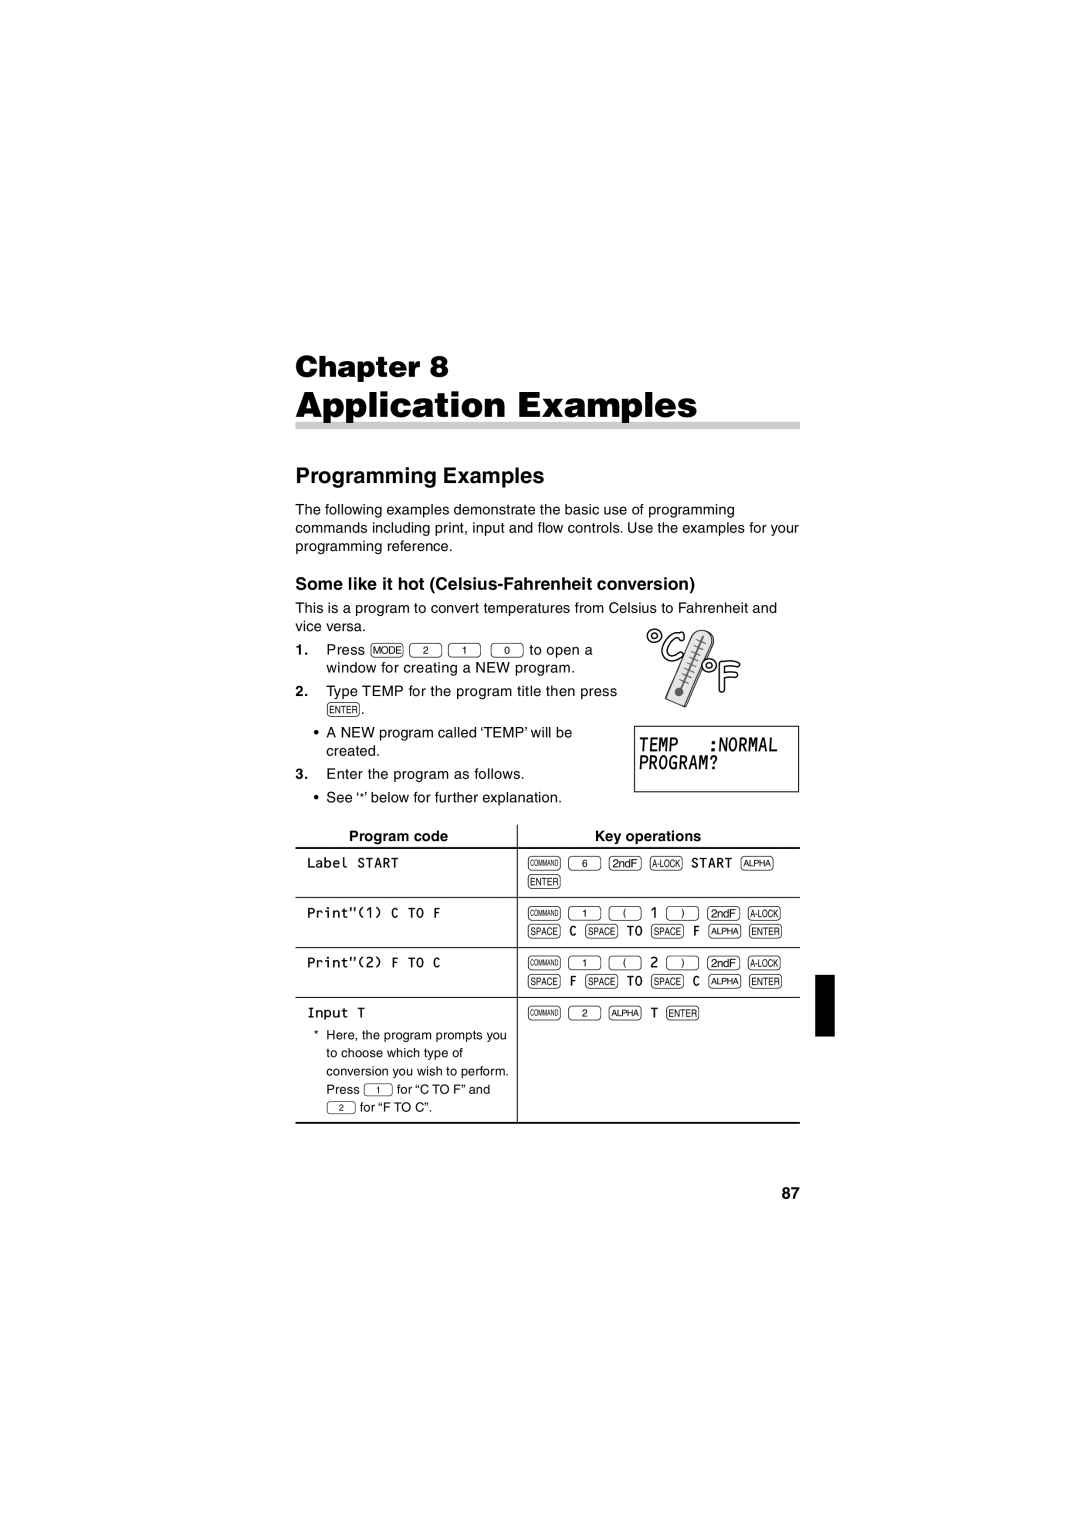 Sharp EL-5230, EL-5250 Application Examples, Programming Examples, Some like it hot Celsius-Fahrenheit conversion, Chapter 